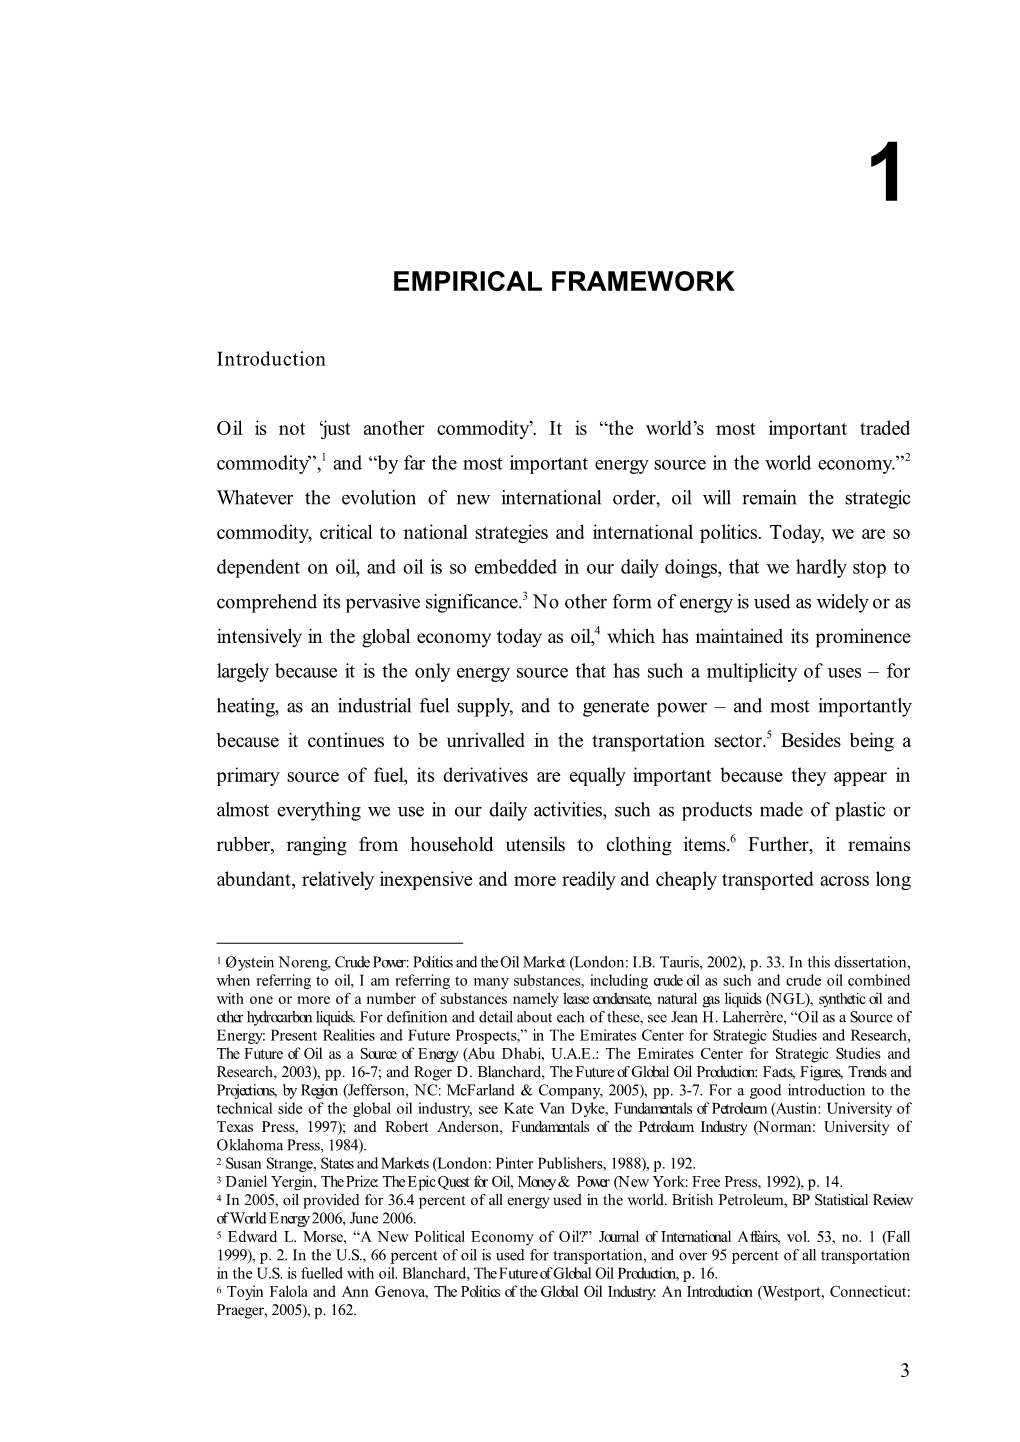 Empirical Framework